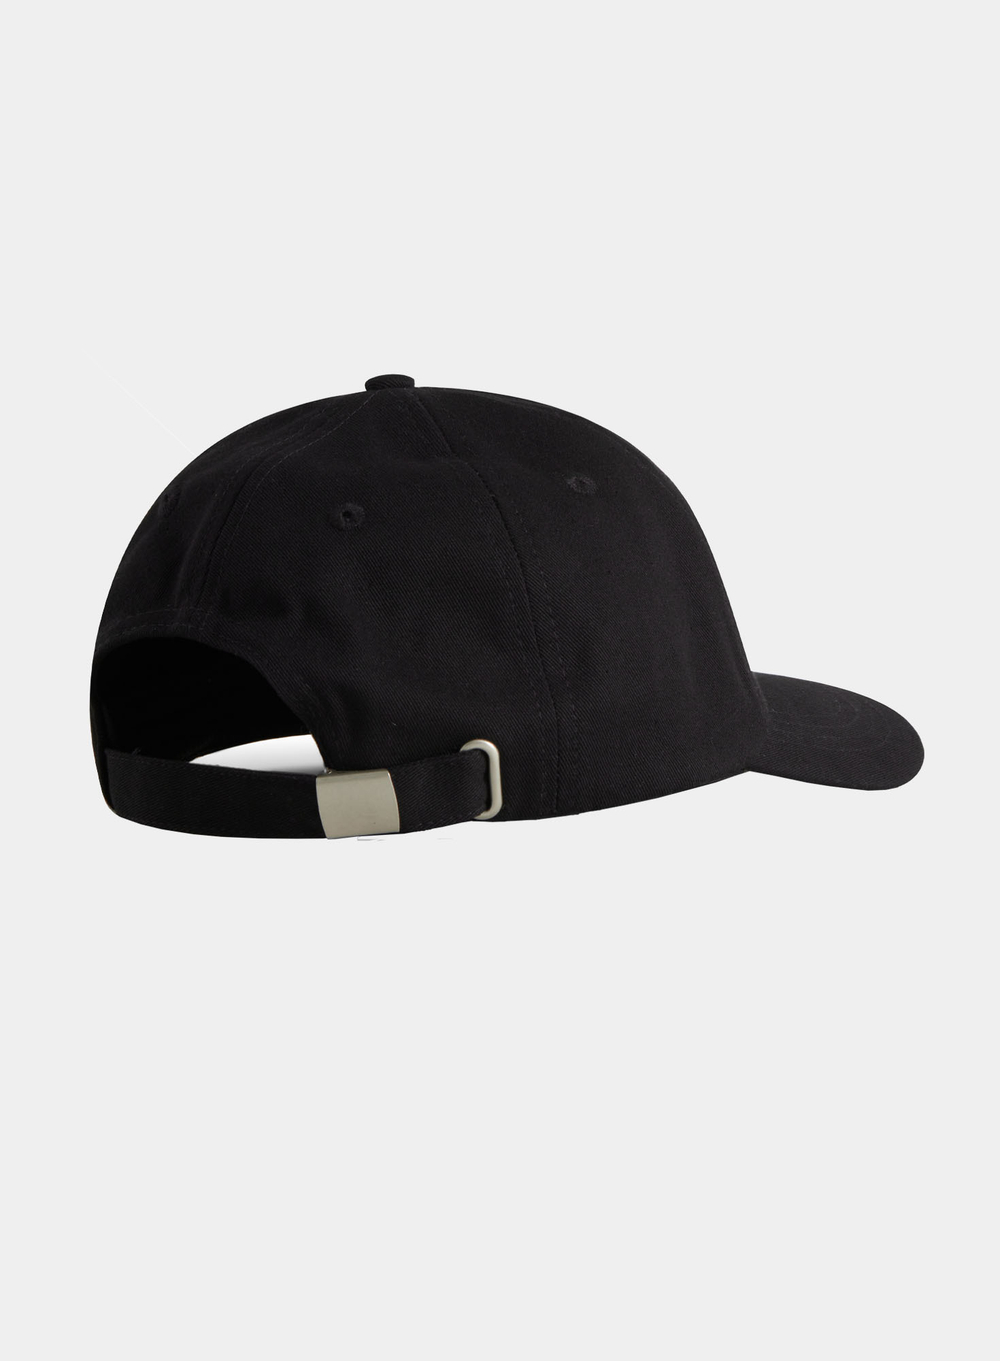 Теннисная кепка  RS Dad cap (222A002 DN)